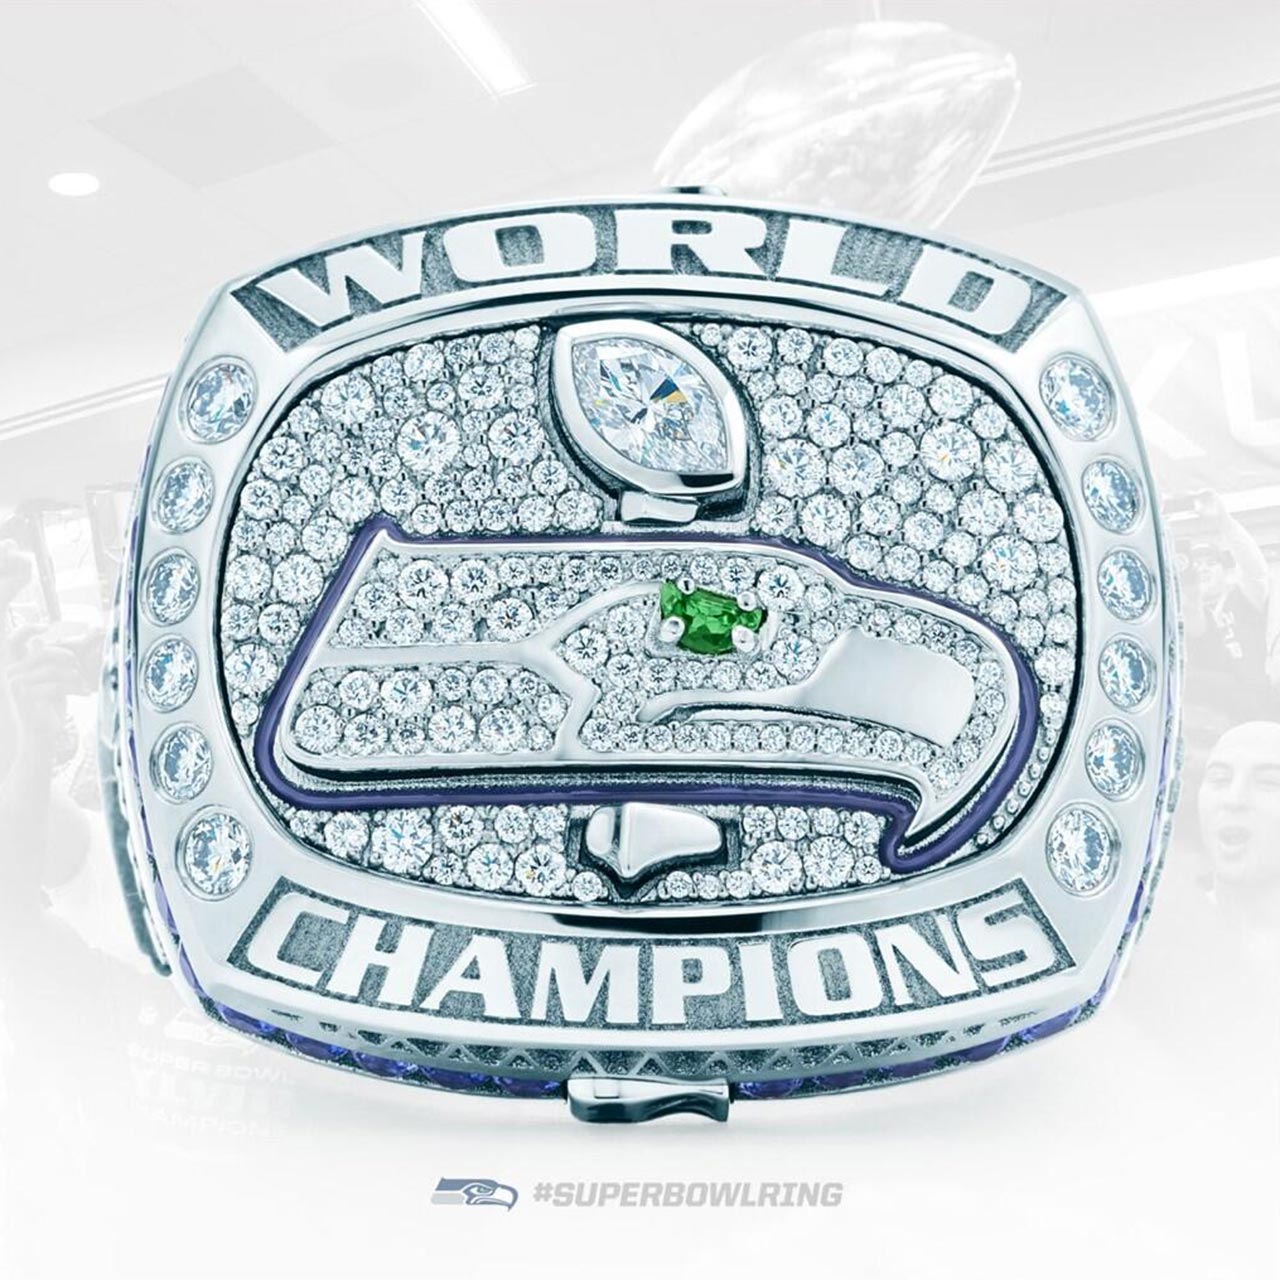 Seattle Seahawks Super Bowl ring